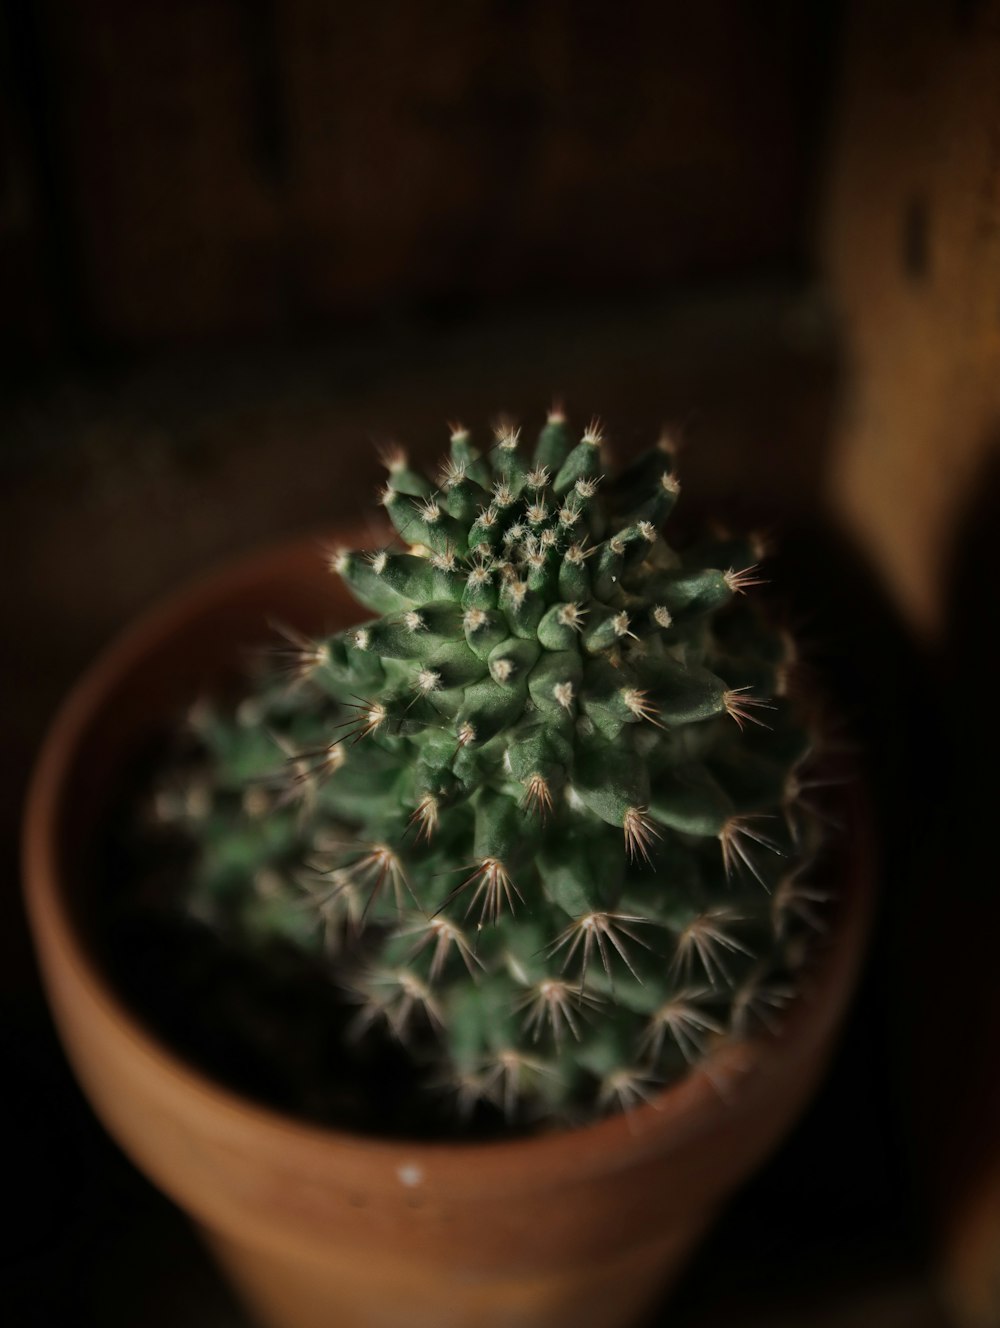 Grüne Kaktuspflanze im braunen Tontopf